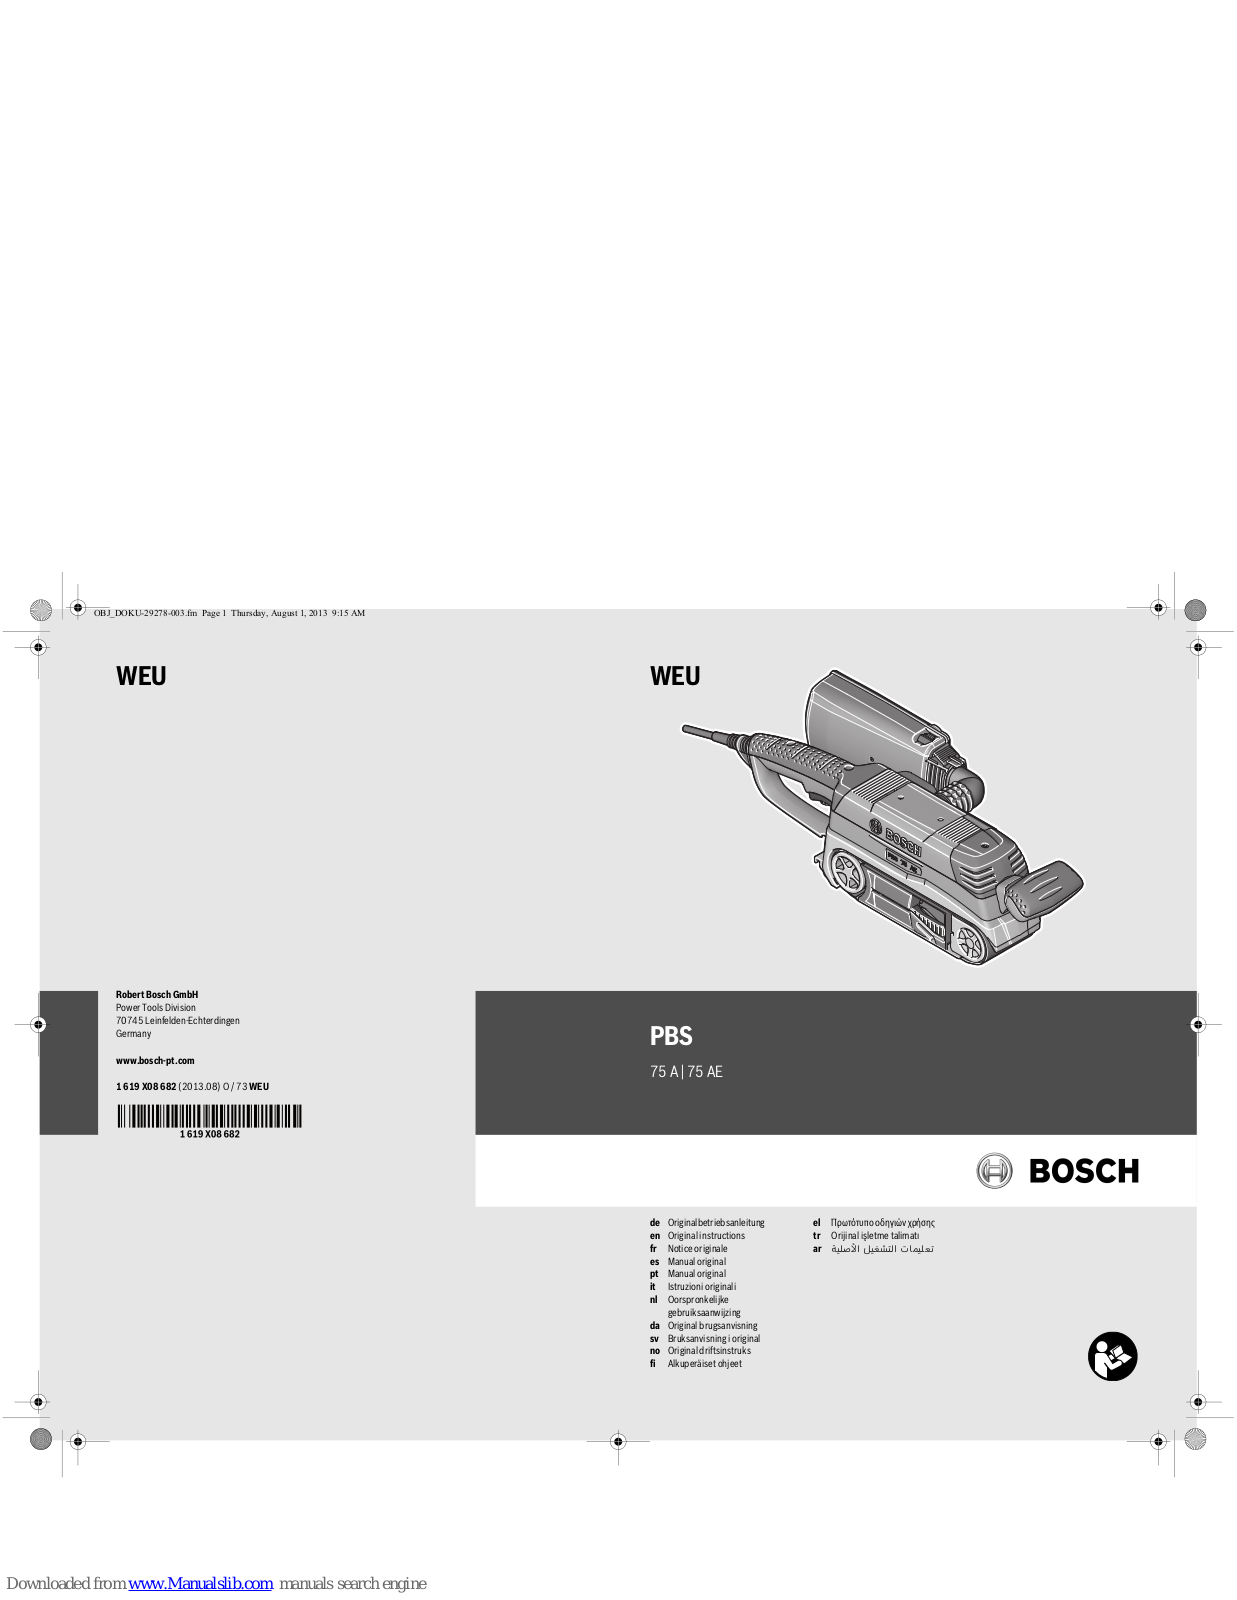 Bosch PBS 75 AE, PBS 75 A Original Instructions Manual